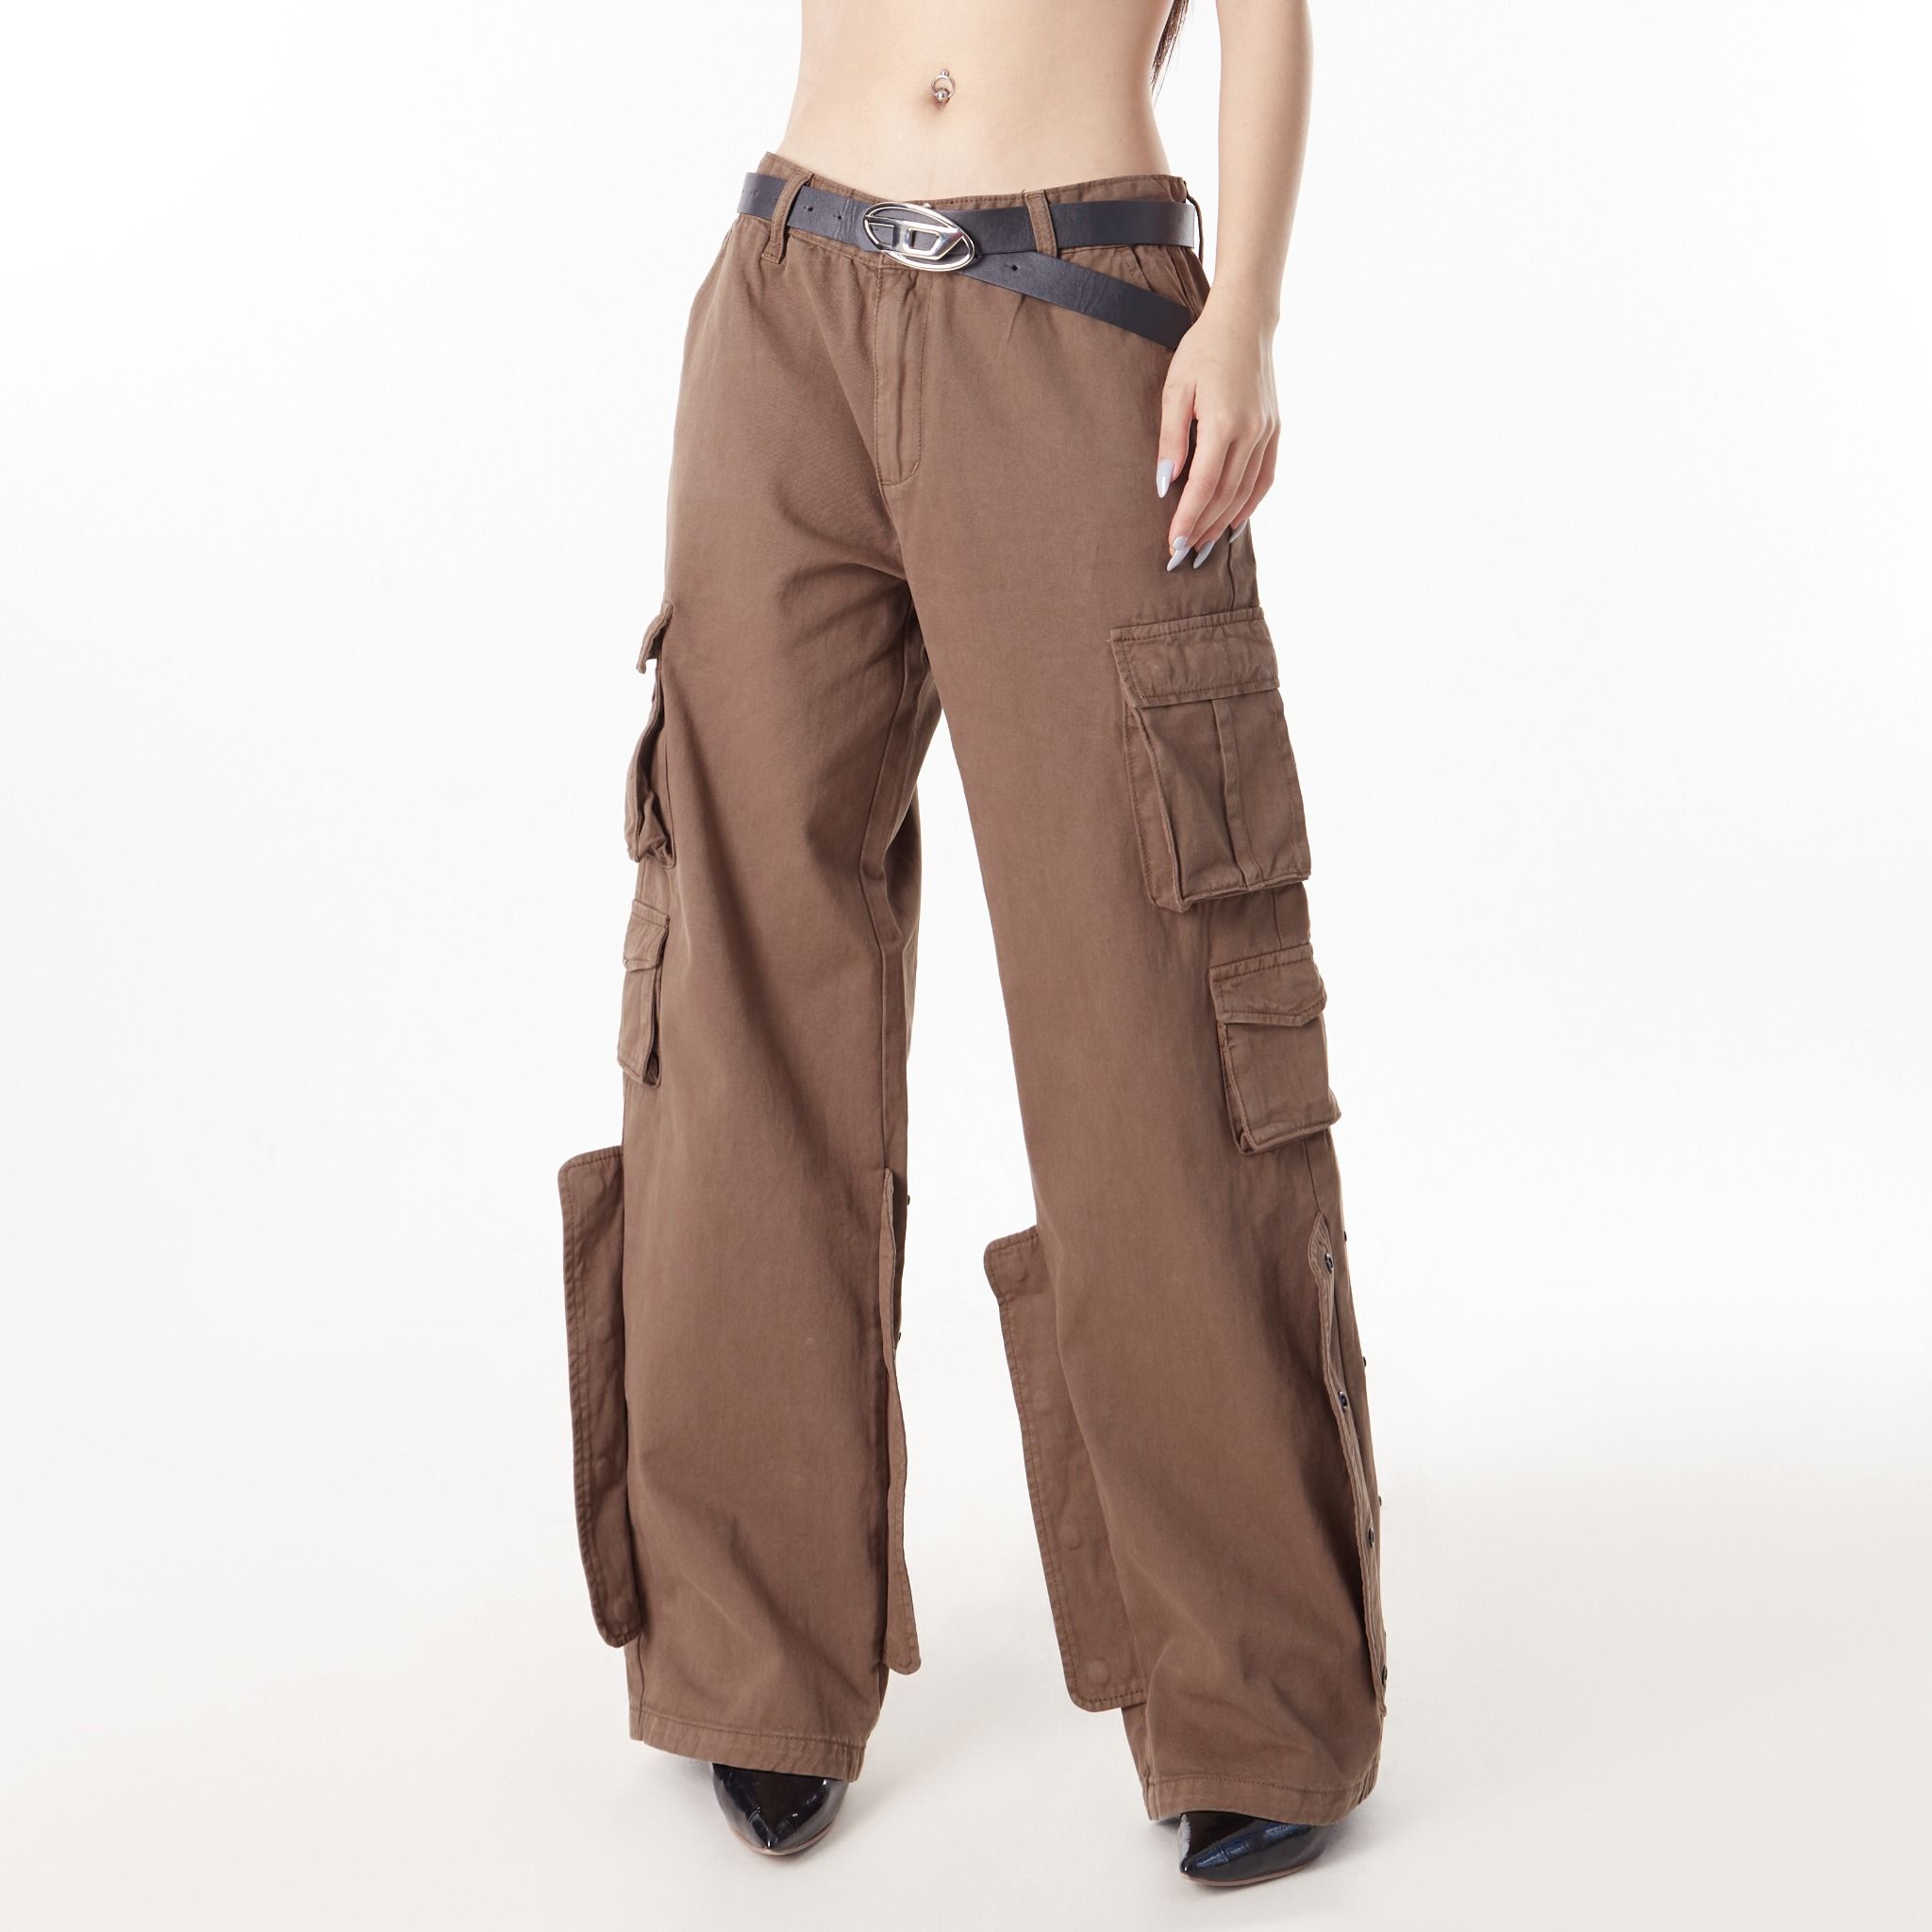 Y-3 | Pants & Jumpsuits | Y3 Yohji Yamamoto Women High Waist Pants Sz Xs |  Poshmark